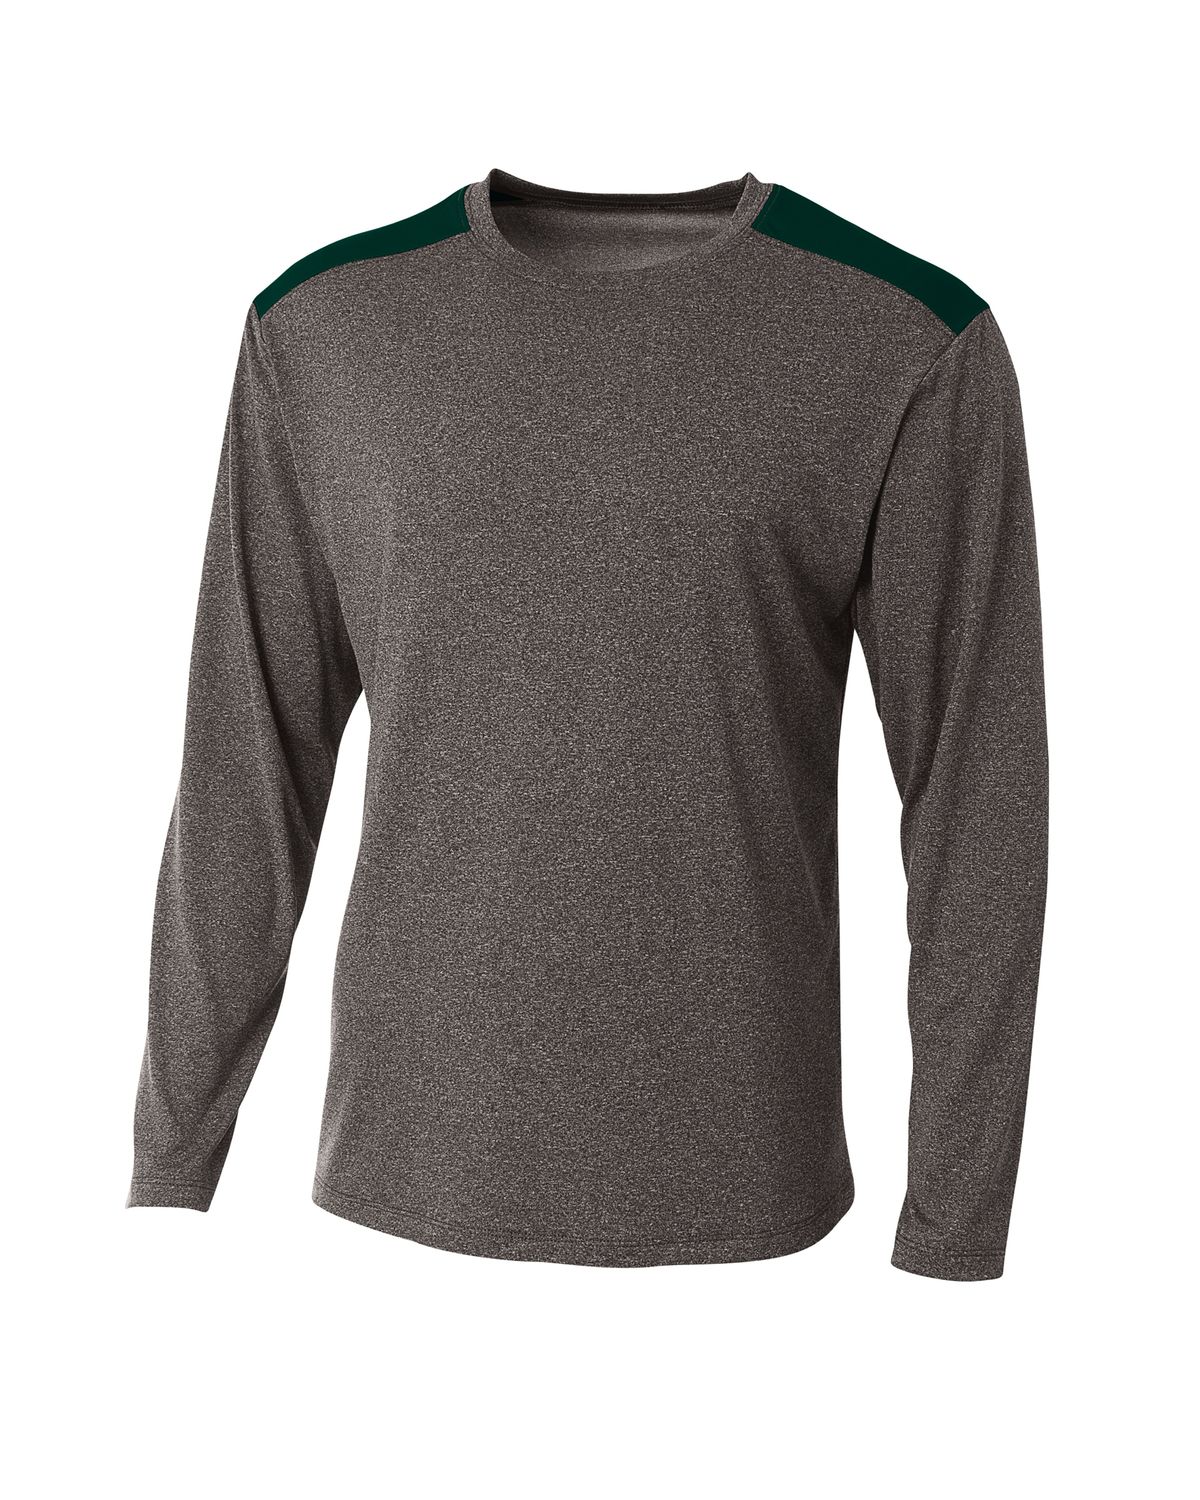 'A4 N3101 Men's Tourney Heather Color Block Long Sleeve T-Shirt'